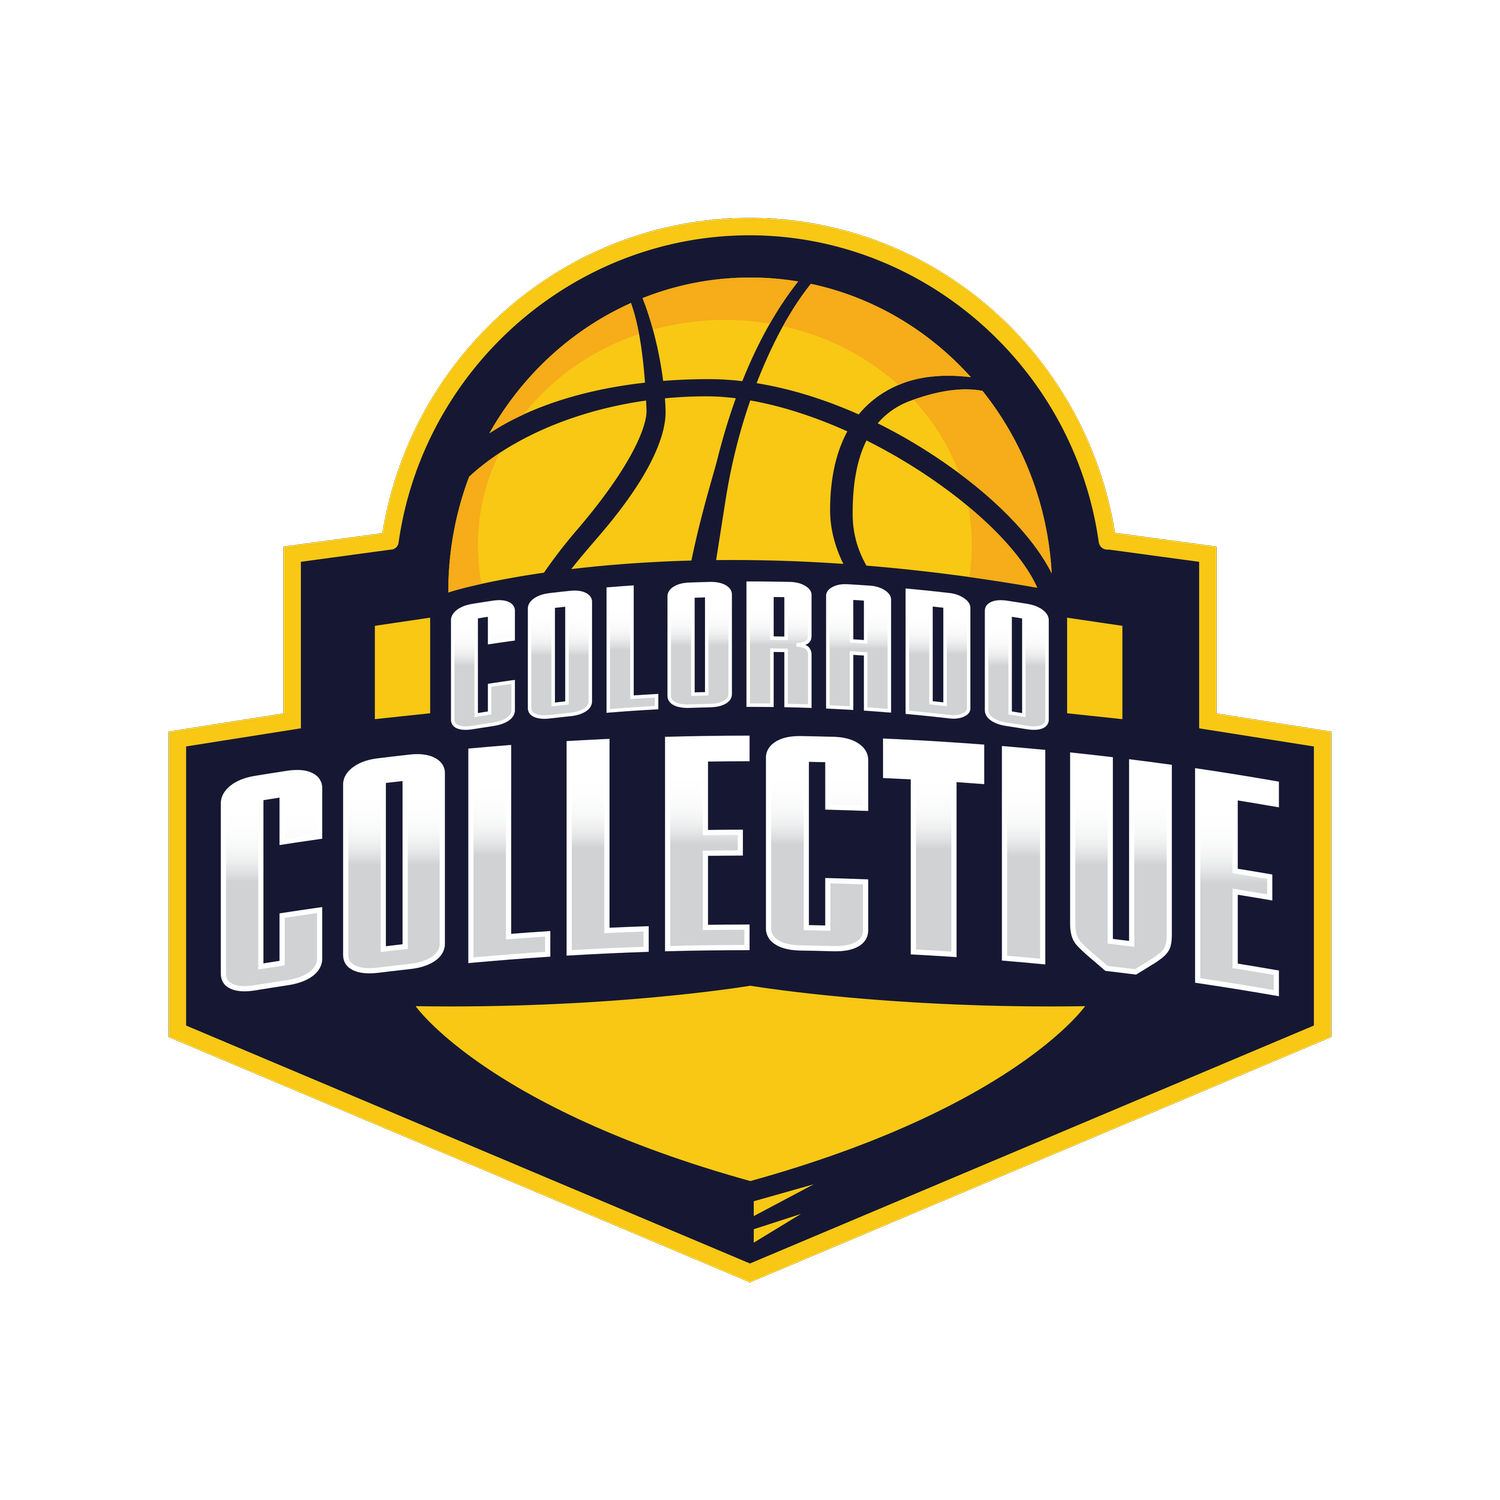 Colorado Collective